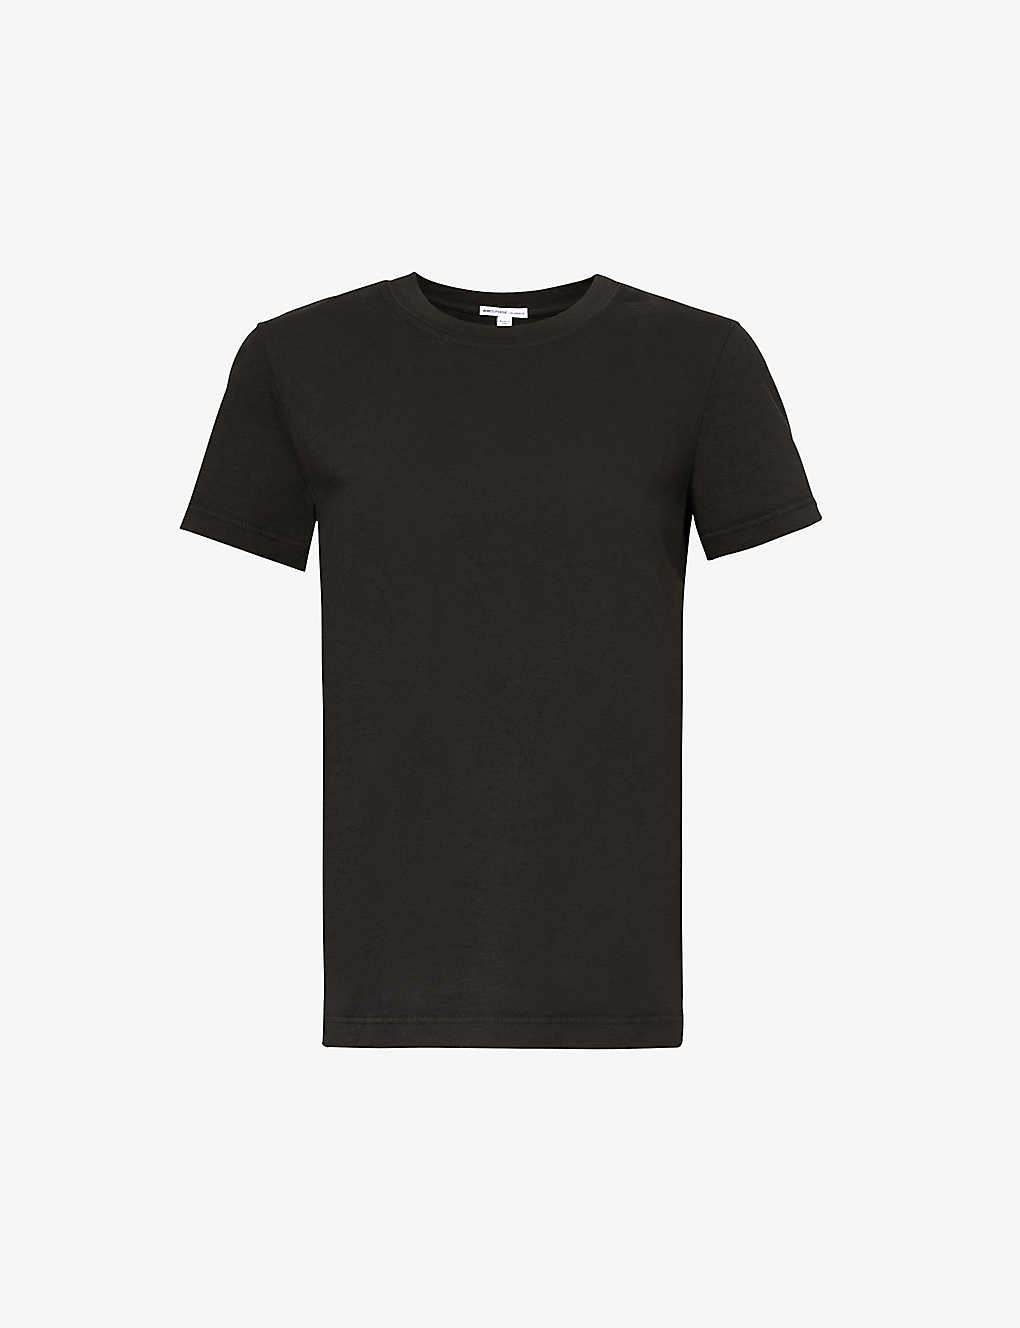 James Perse Womens Carbon Little Boy Cotton-jersey T-shirt